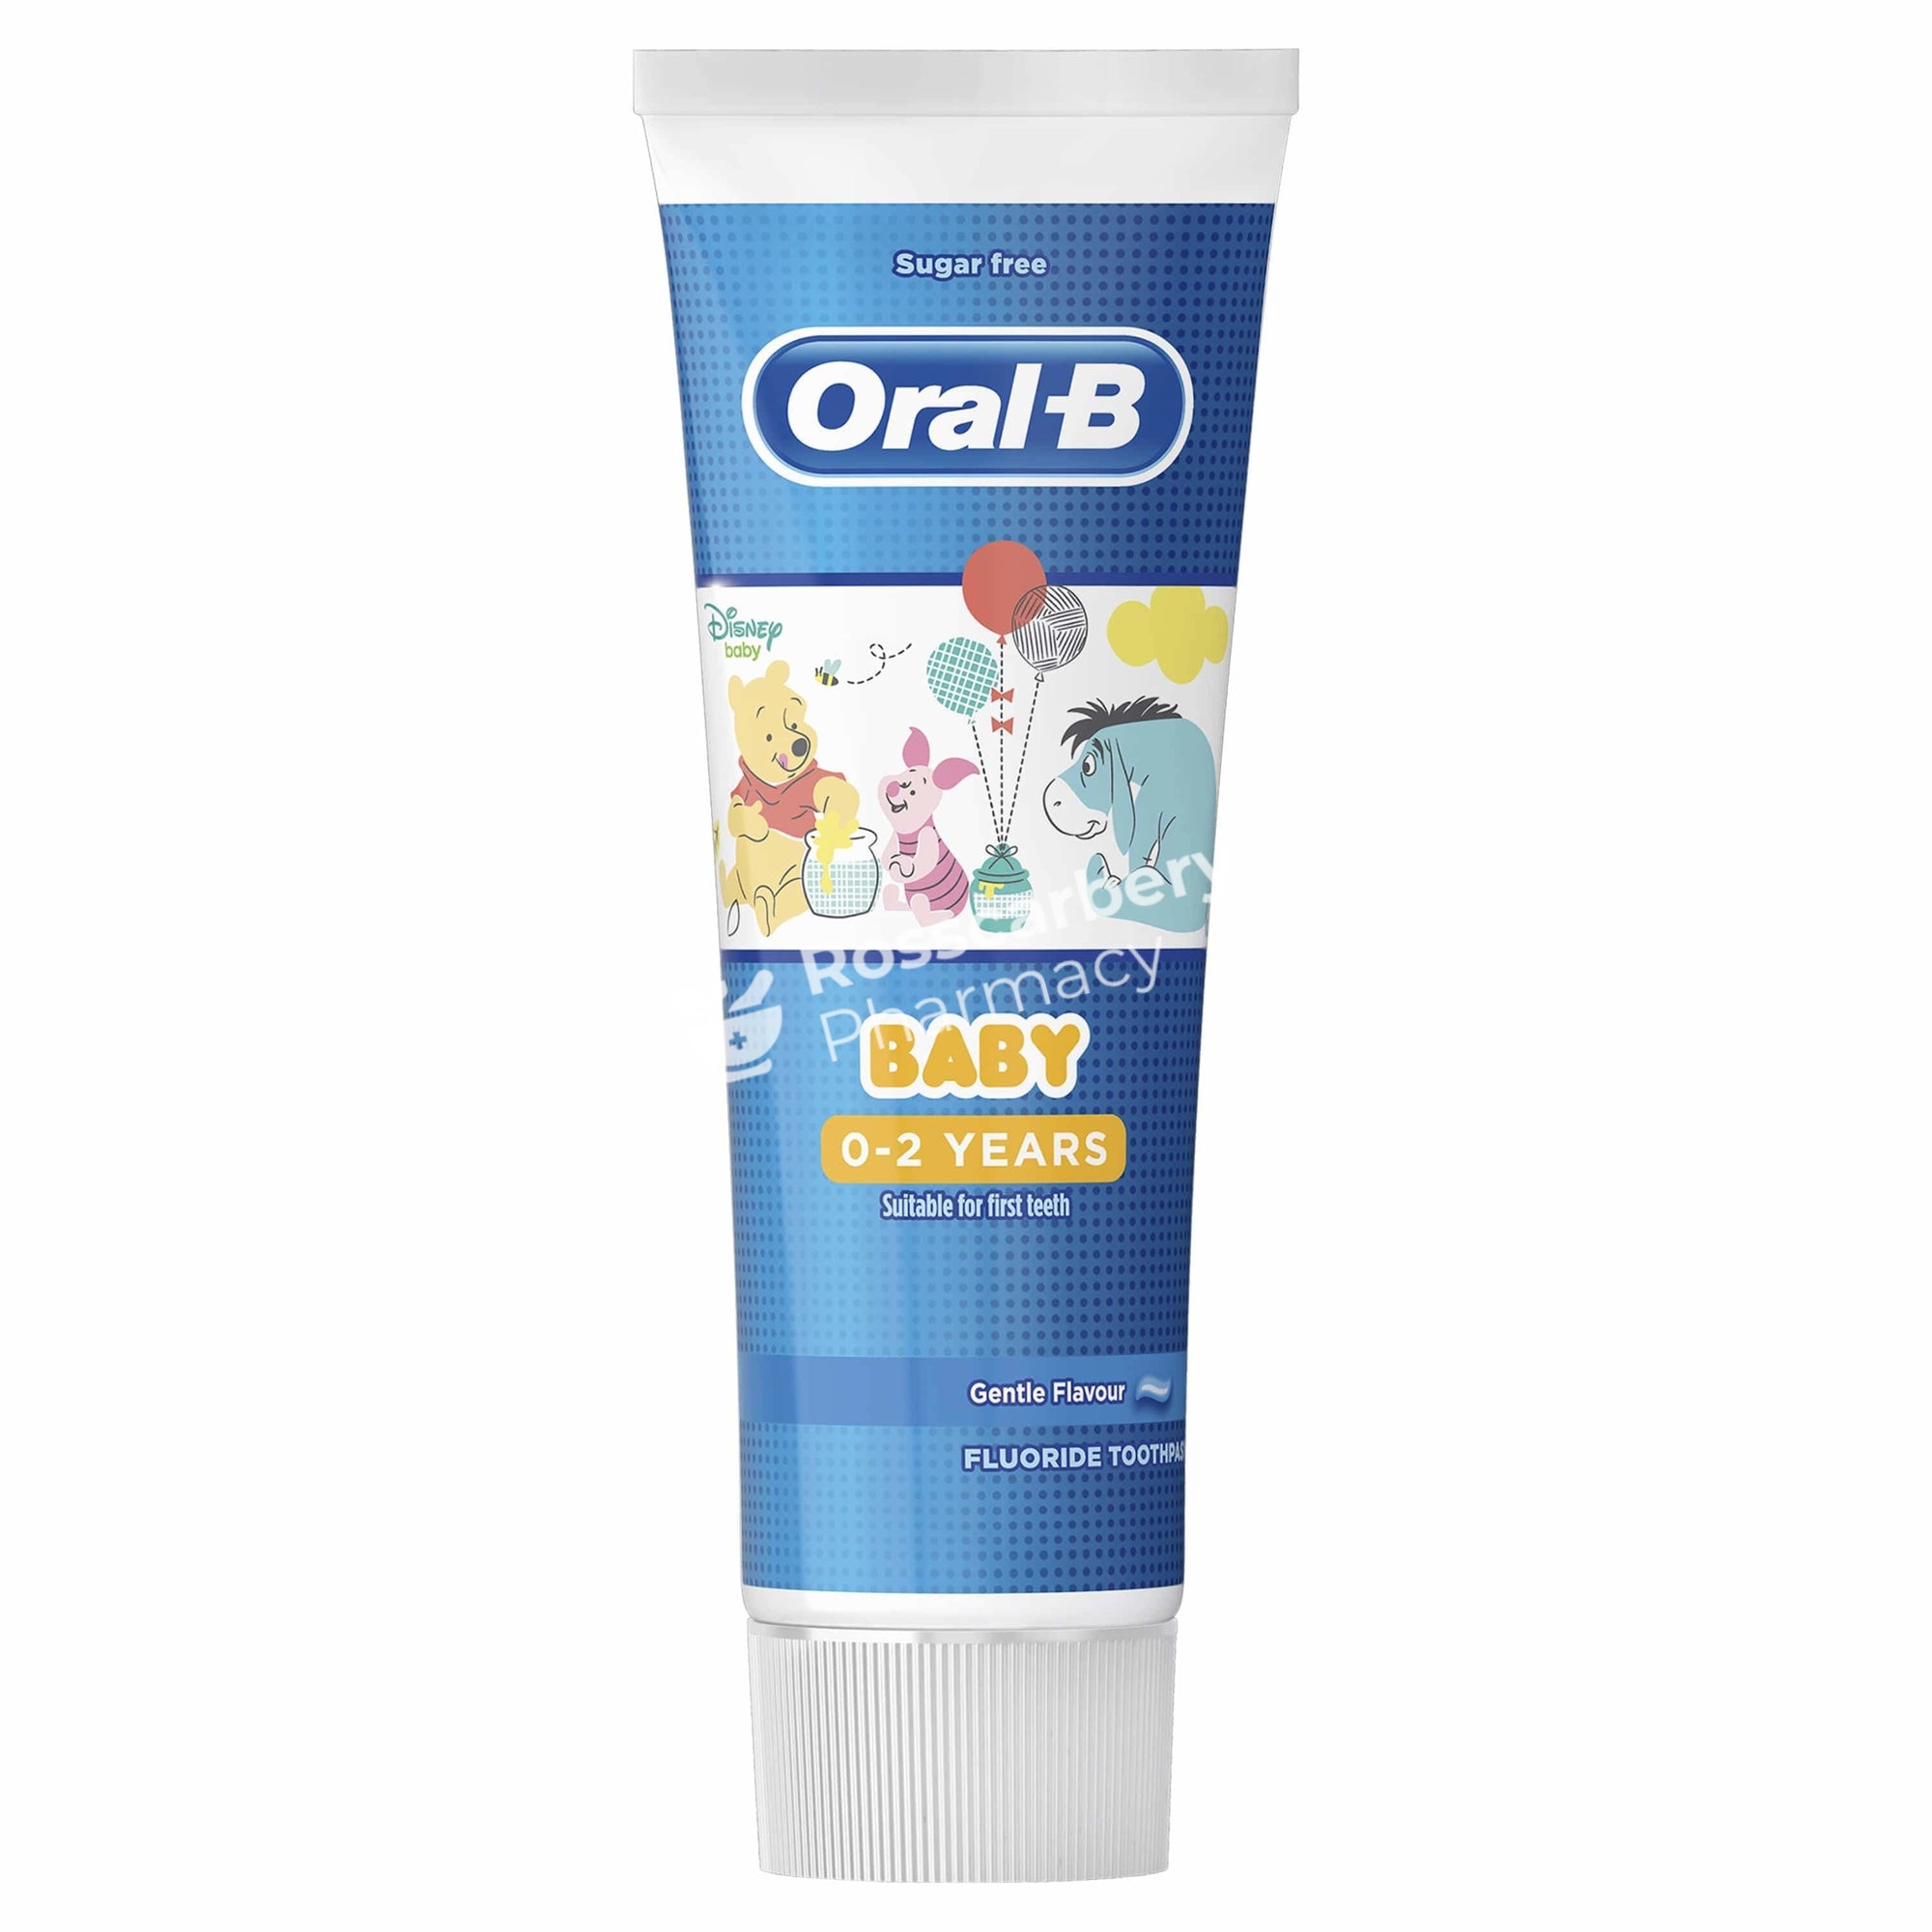 Oral-B Baby Toothpaste 0-2 Years Gentle Flavour Kids Dental